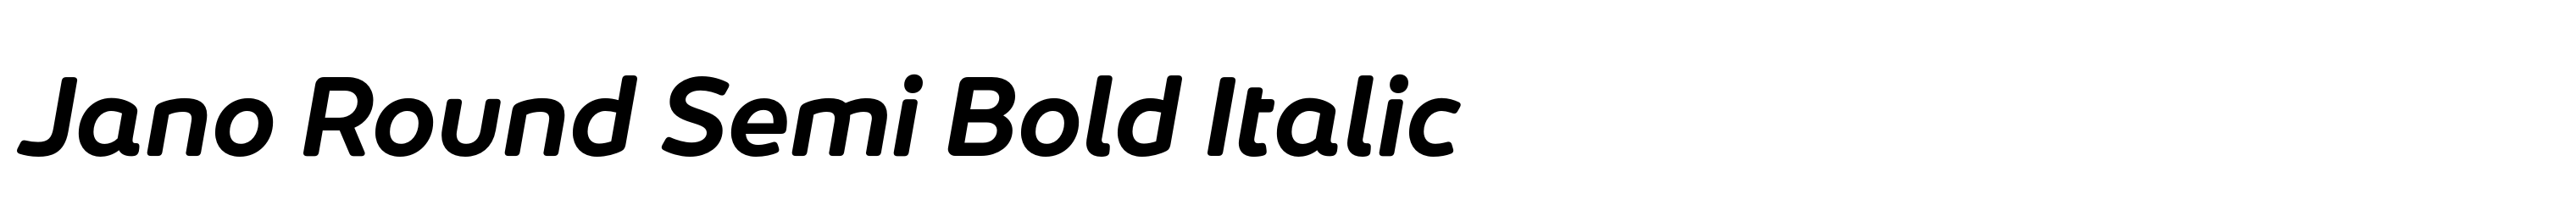 Jano Round Semi Bold Italic